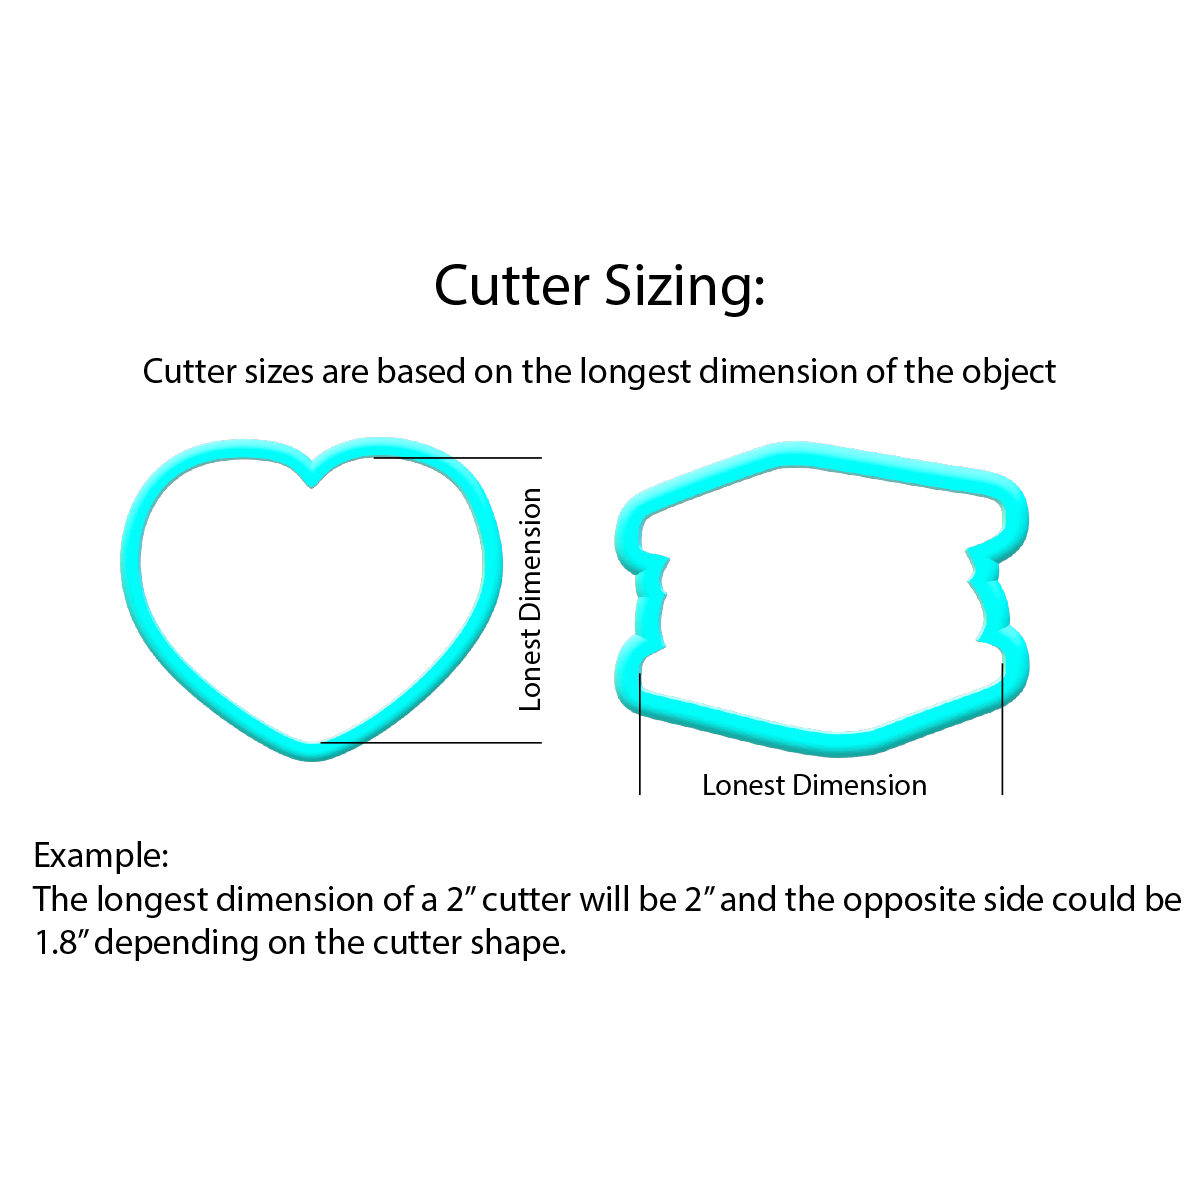 Bear Heart Cookie Cutters